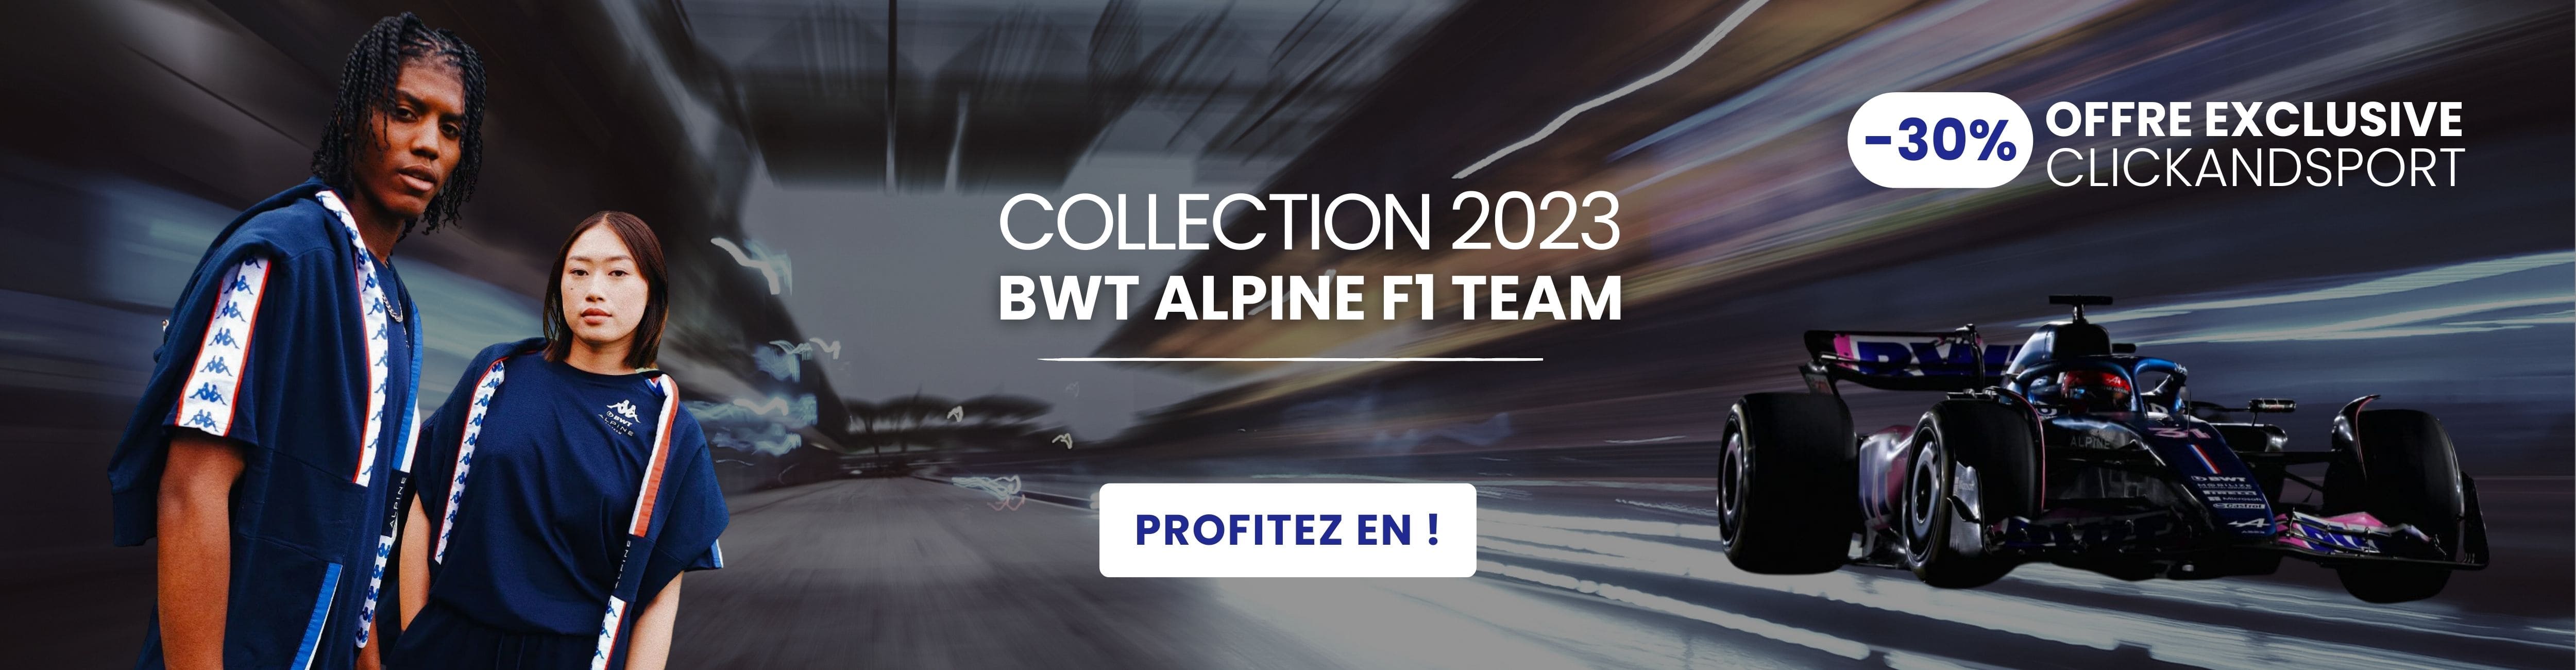 alpine kappa formule 1 promo 2023